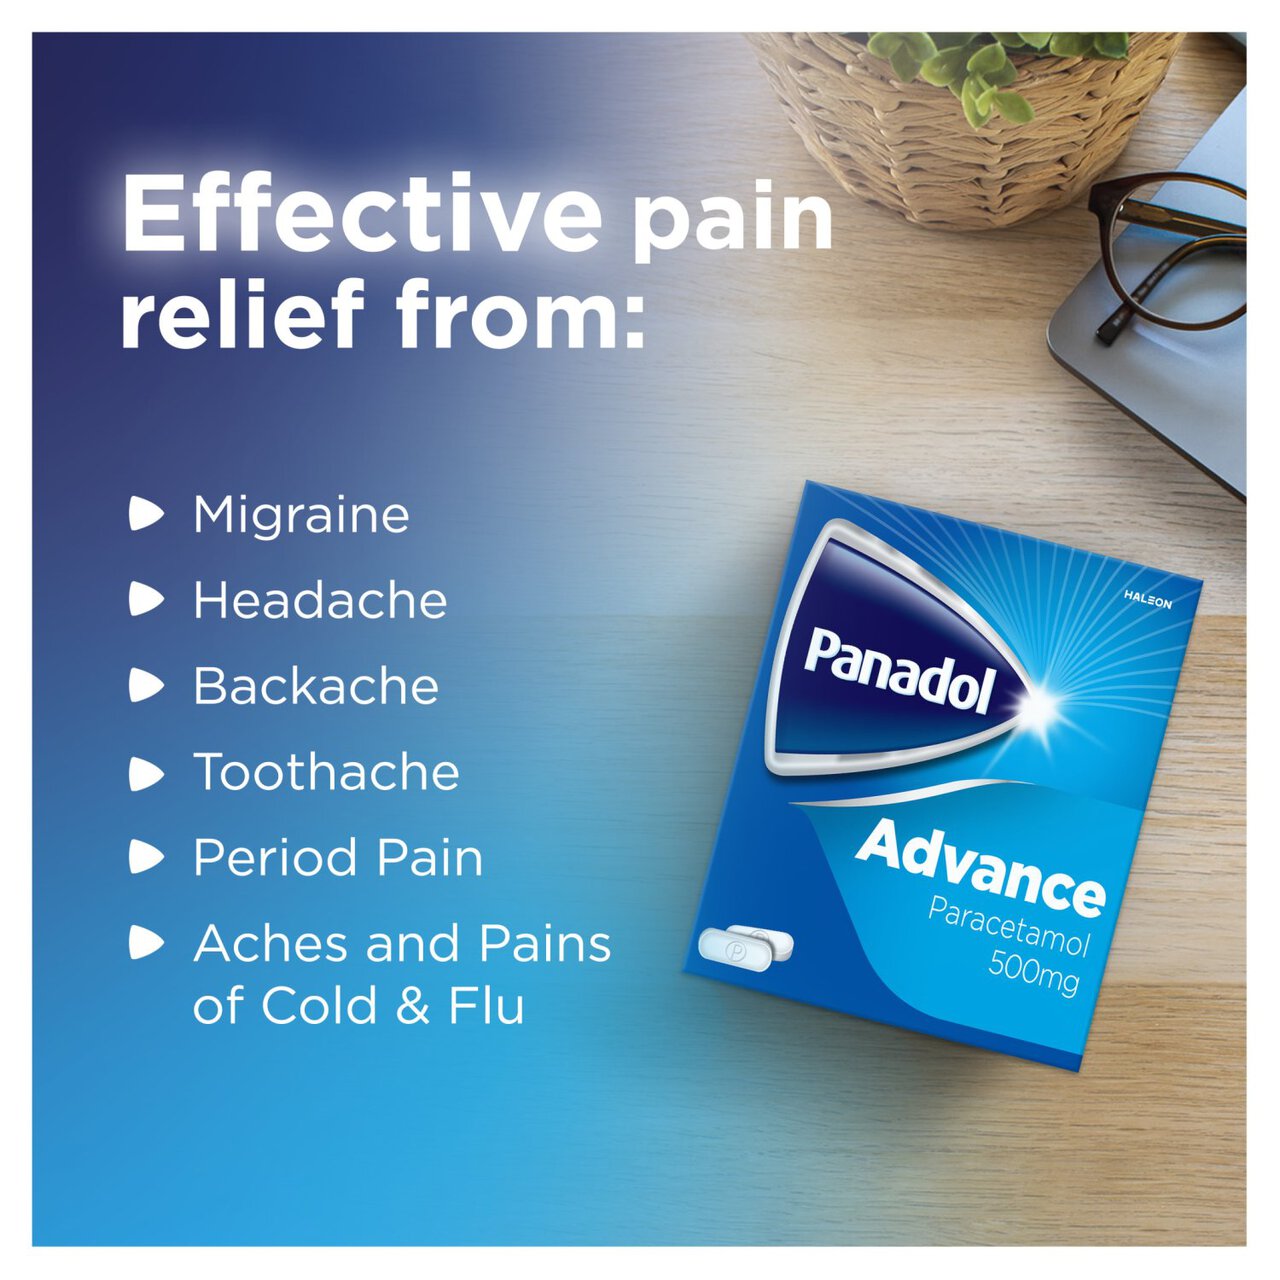 Panadol Advance Paracetamol Pain Killers 500mg 16 Tablets 16 per pack